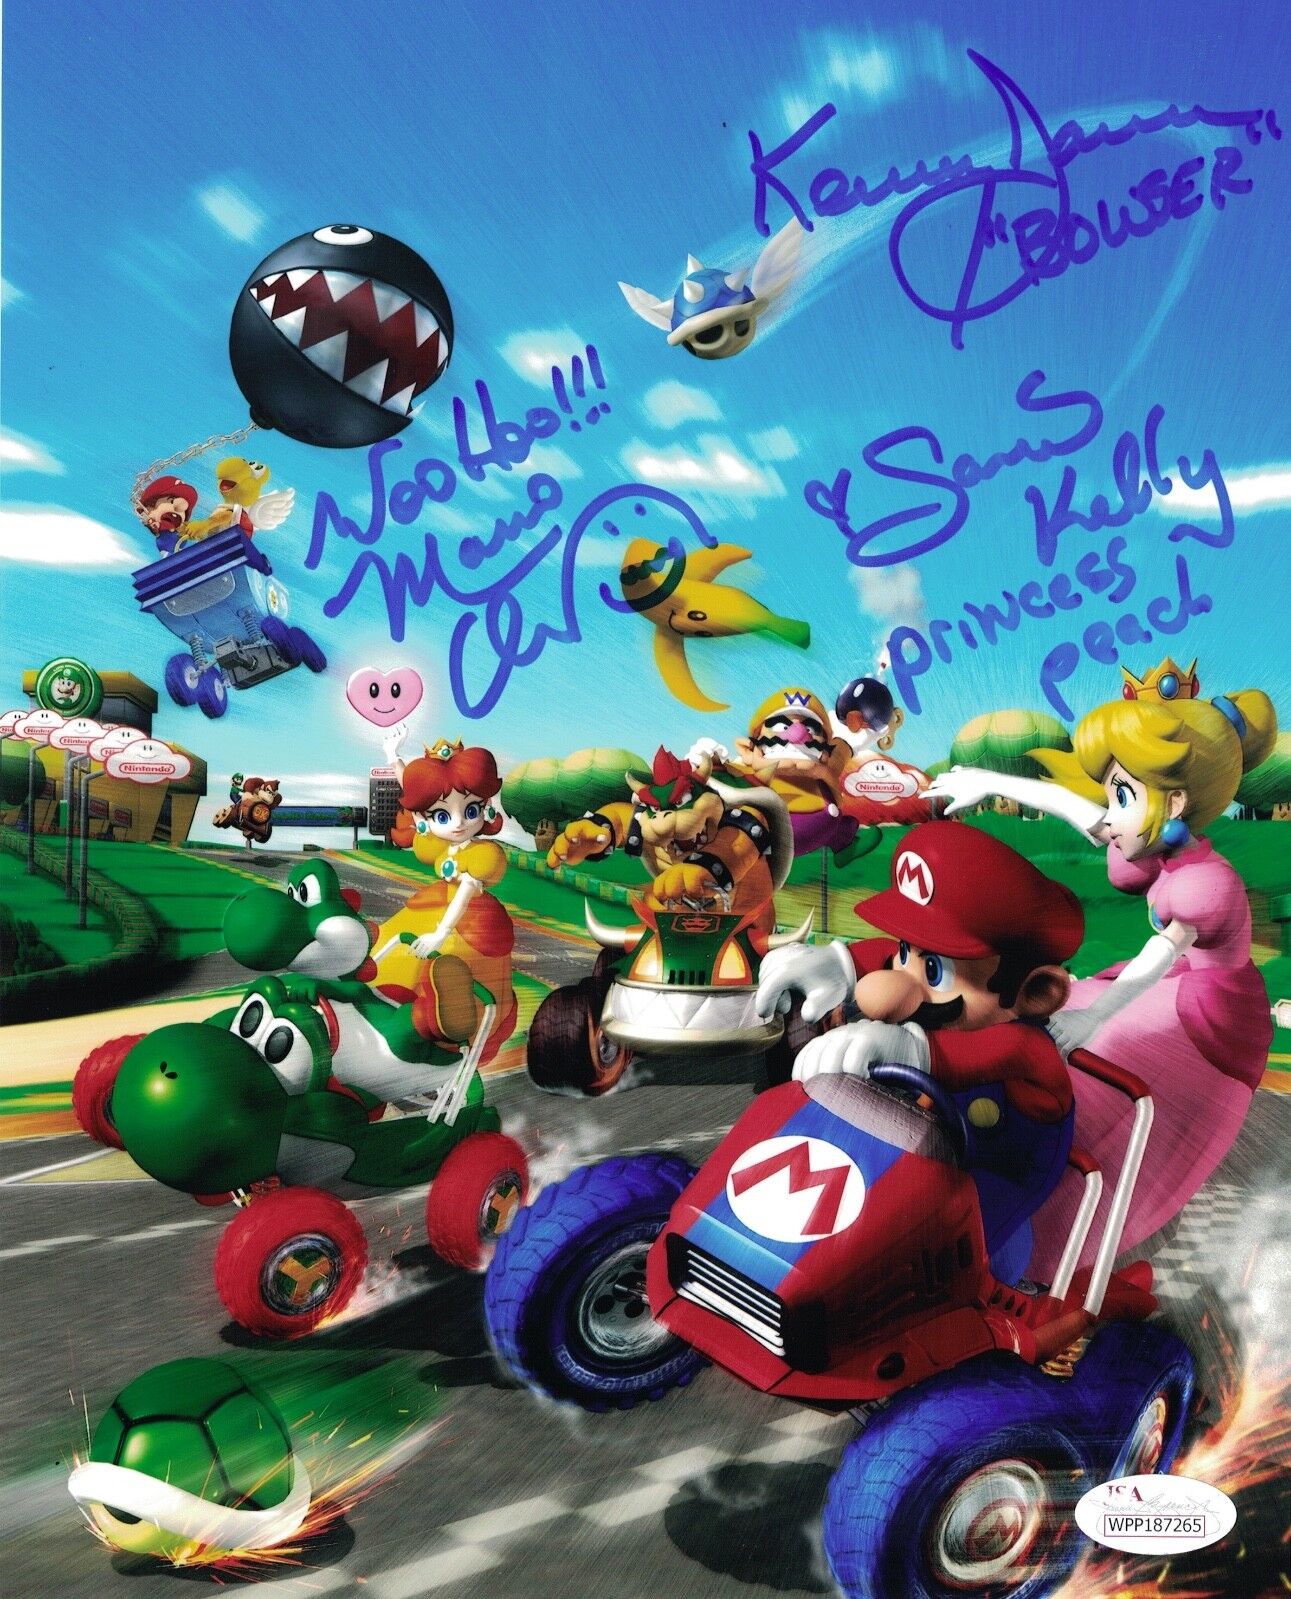 Super Mario Cast x3 Signed Charles Martinet & Samantha Kelly 8x10 Photo Poster painting JSA COA